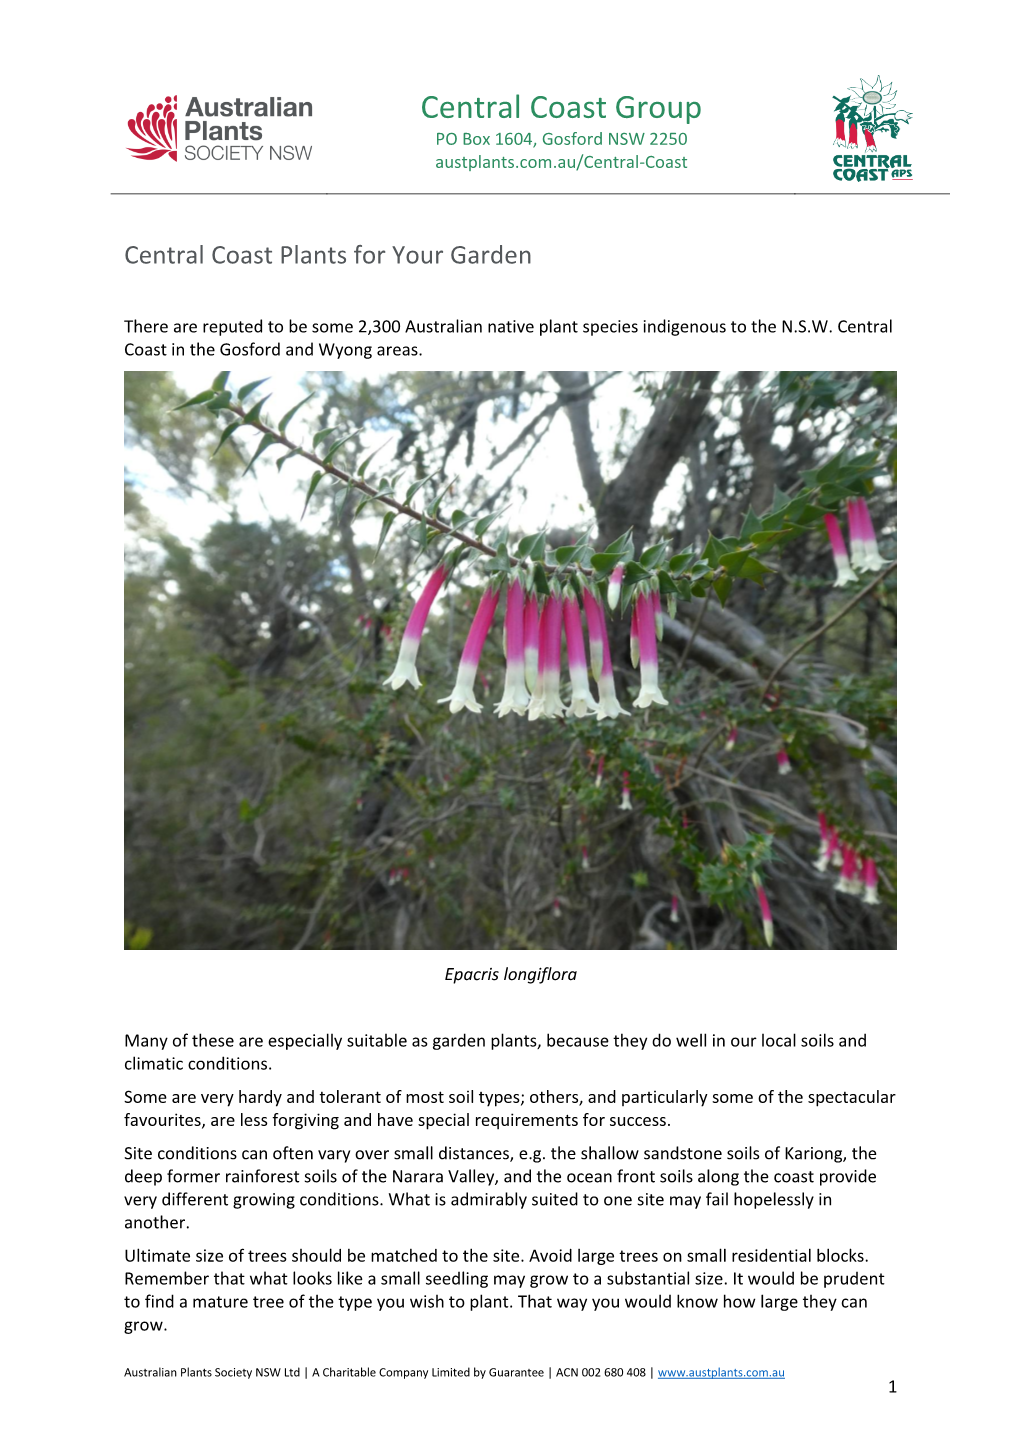 Central Coast Group PO Box 1604, Gosford NSW 2250 Austplants.Com.Au/Central-Coast